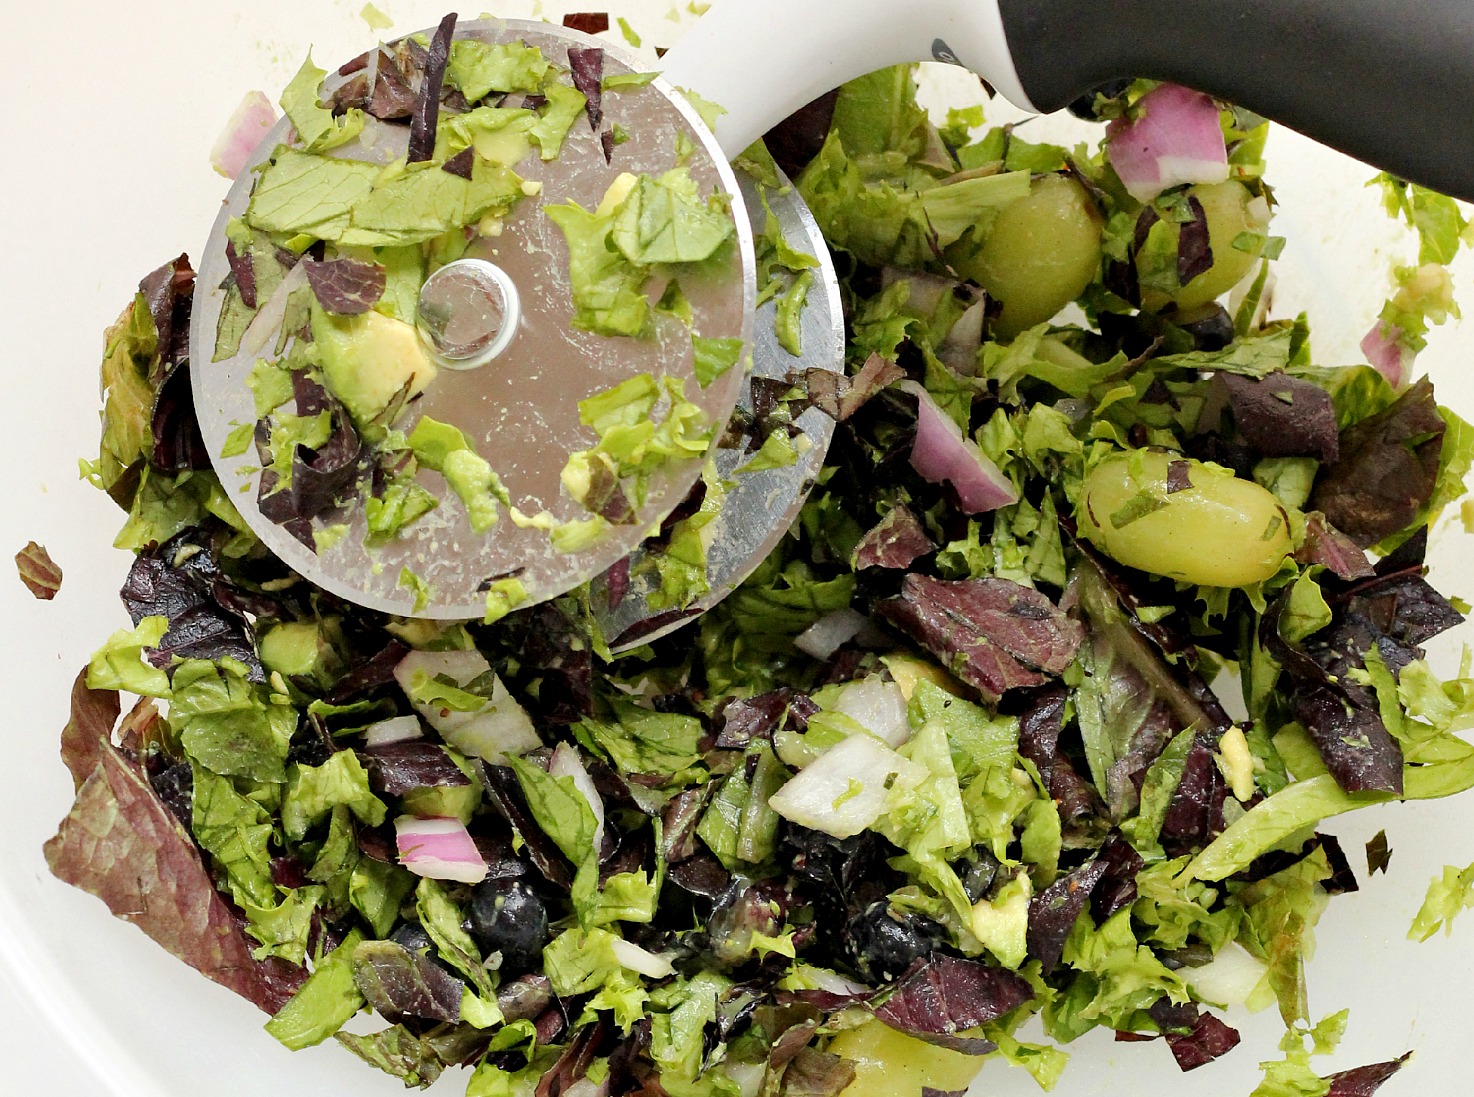 How to make salads taste better